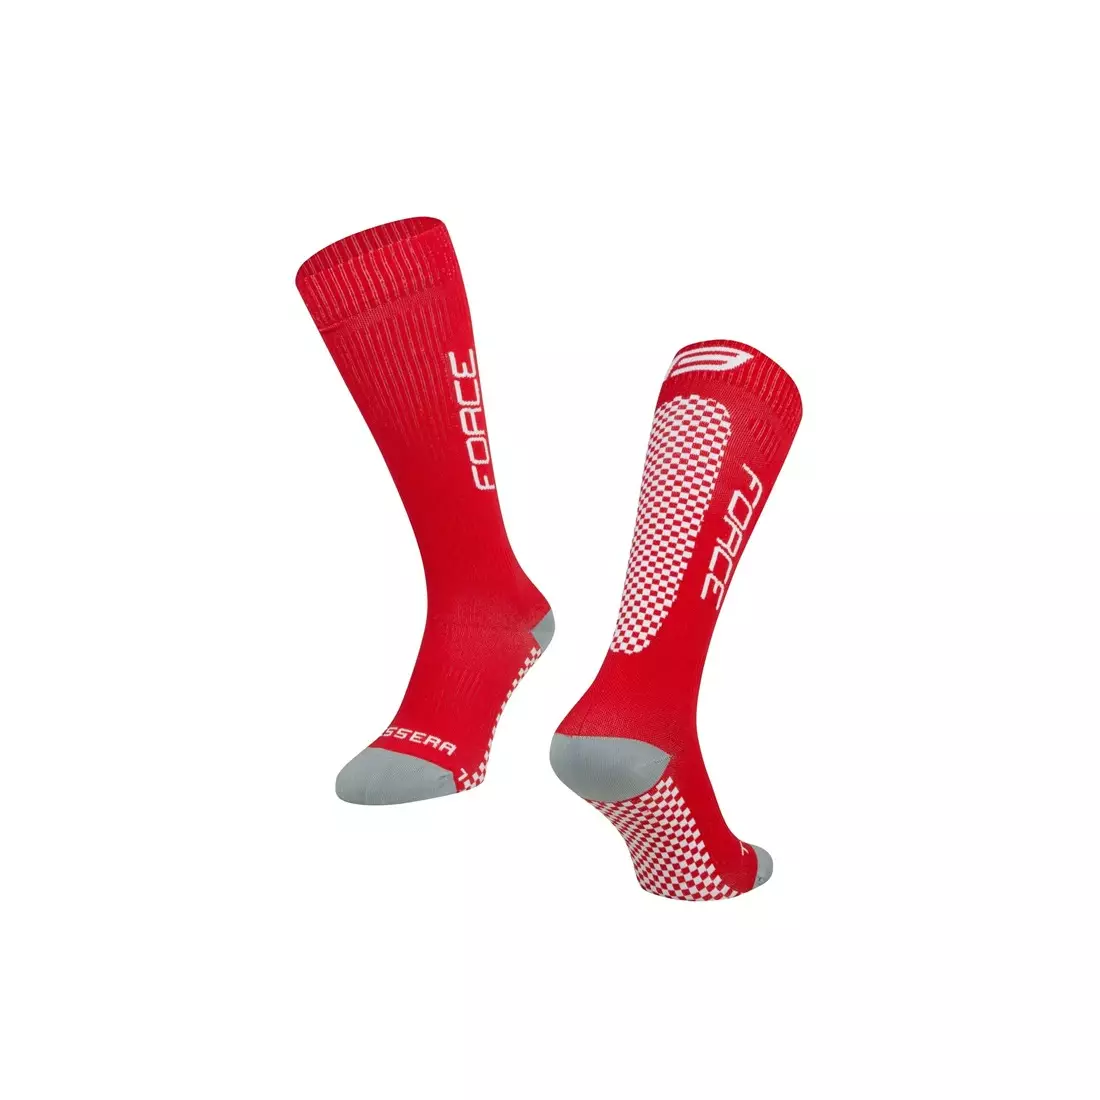 FORCE TESSERA COMPRESSION compression socks, red